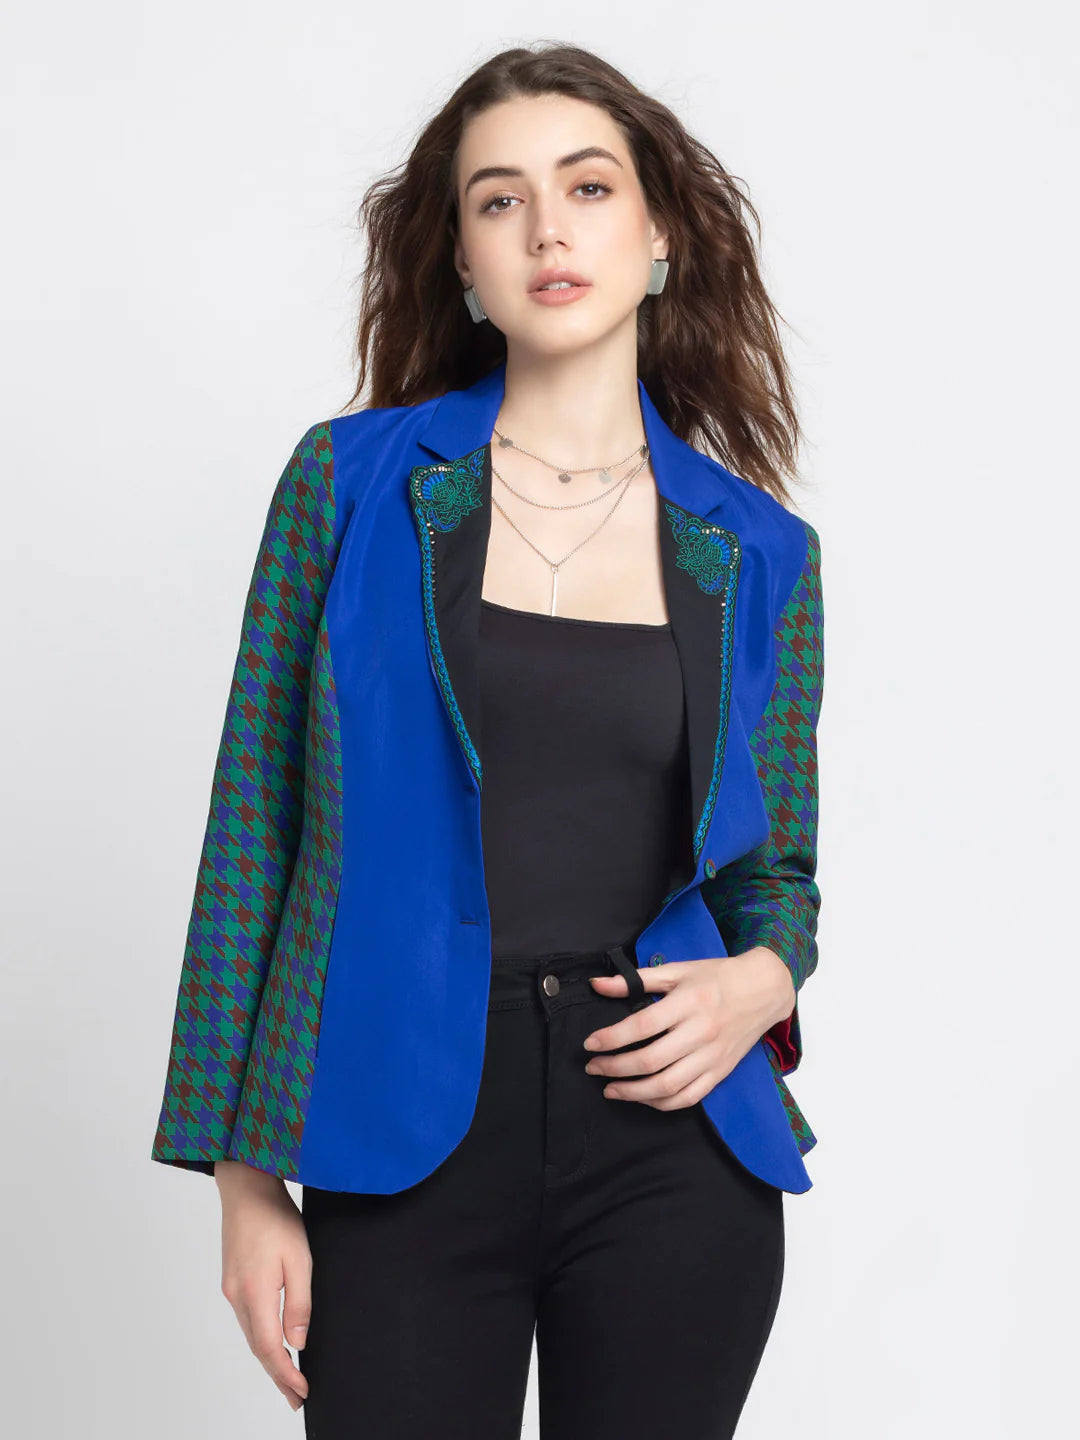 Blue Collar Women Party Blazer | Elegance Blue Embroidered Lapel Collar Party Blazer